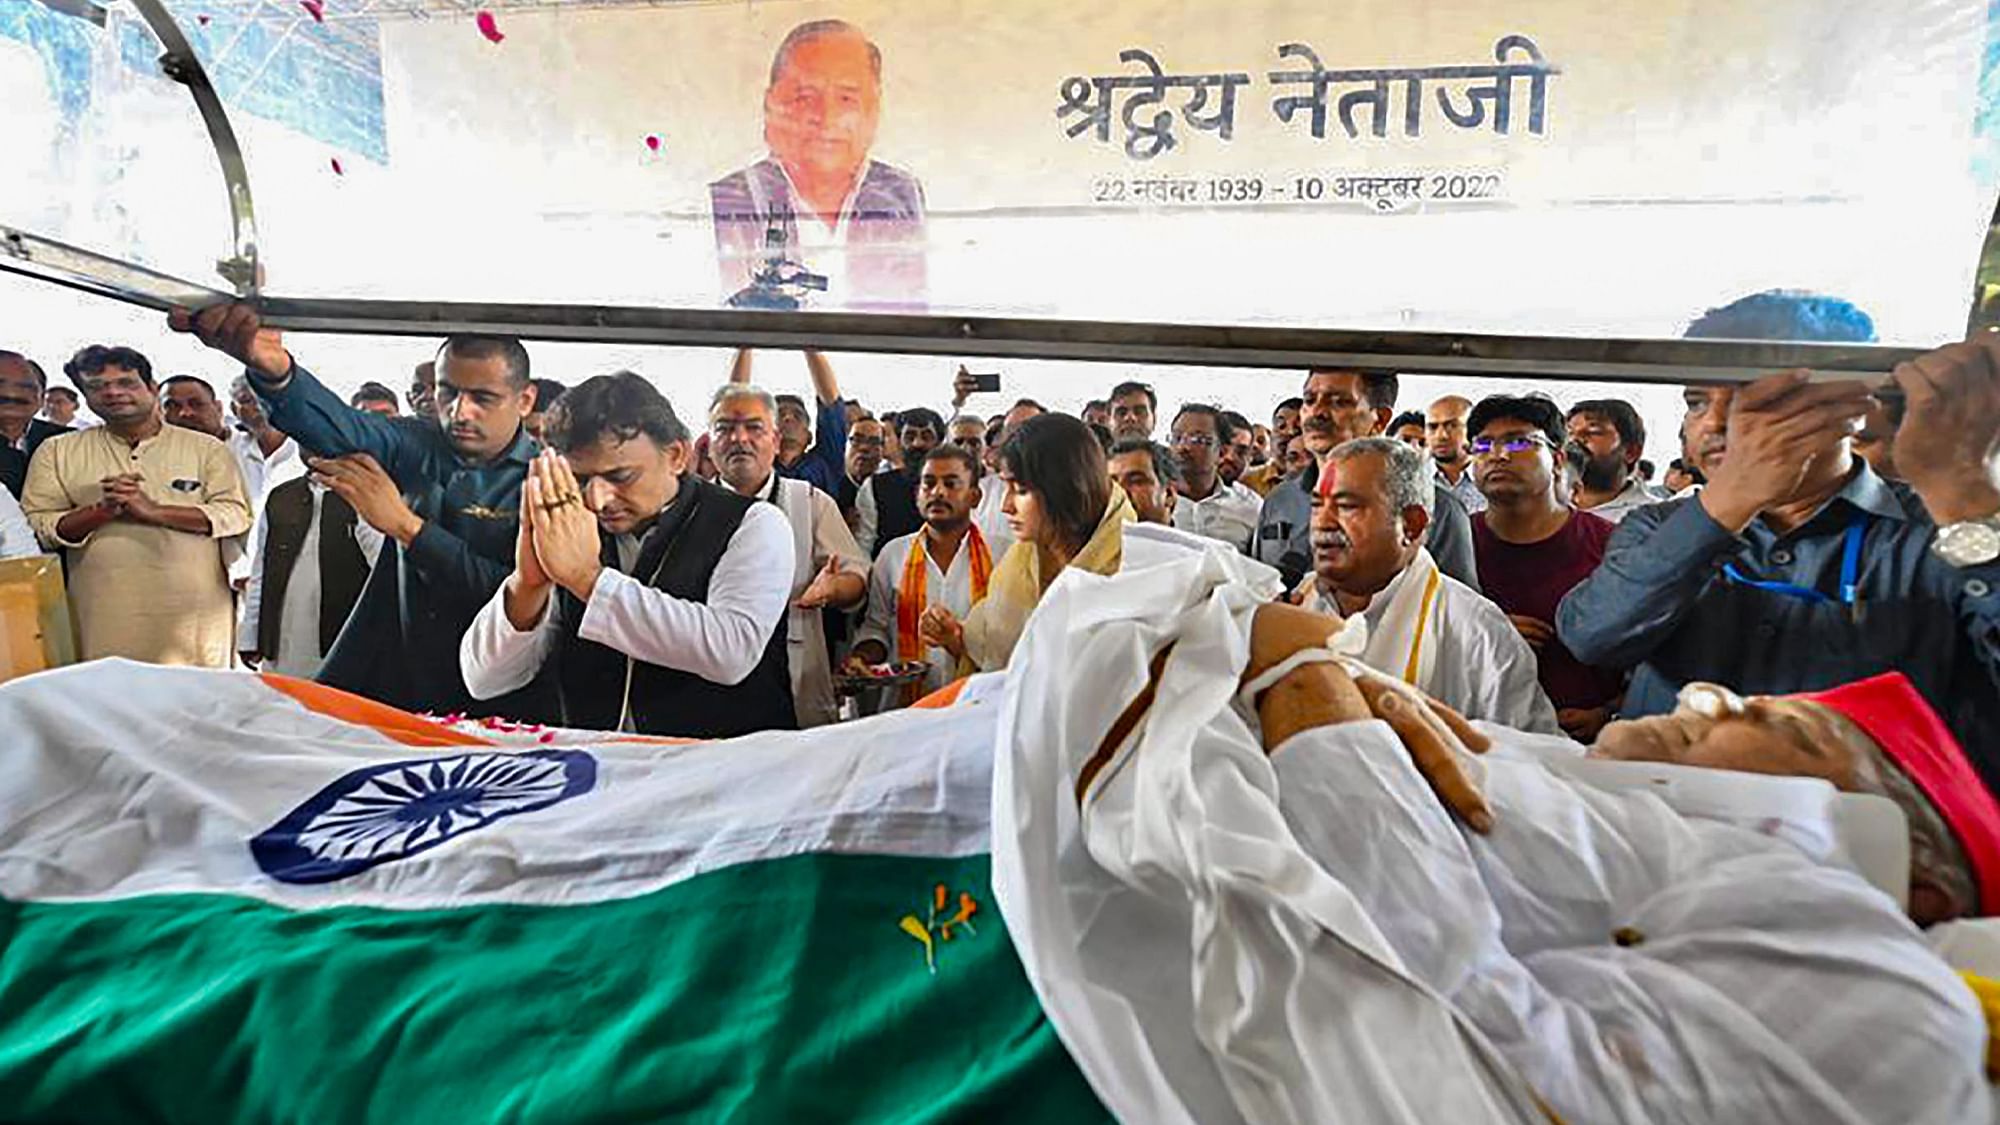 <div class="paragraphs"><p>Saifai: Samajwadi Party President Akhilesh Yadav and others during party founder Mulayam Singh Yadav's funeral, in Saifai, Tuesday, Oct. 11, 2022. </p></div>